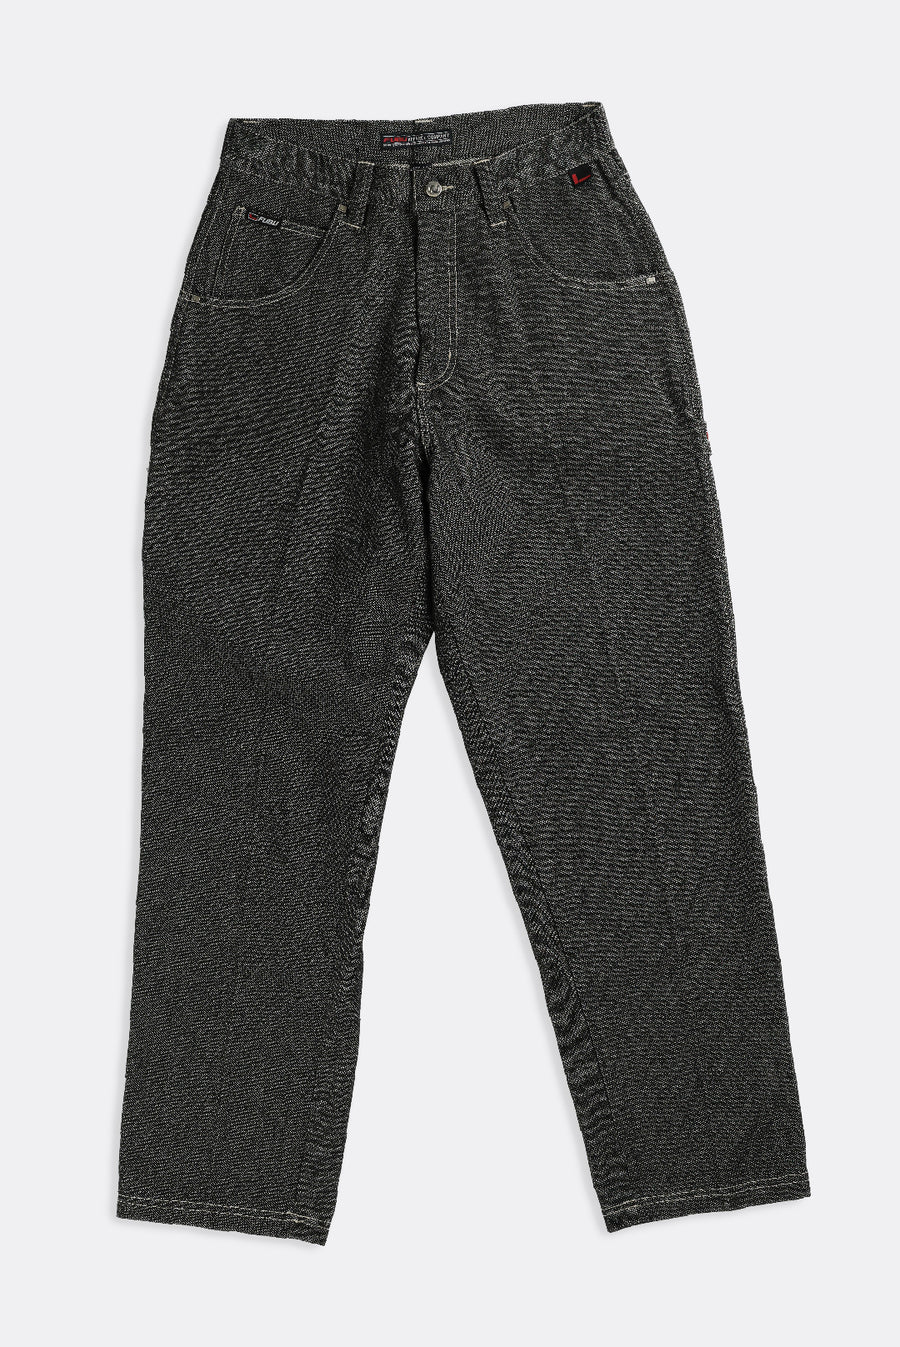 Vintage FUBU Denim Pants - W32, W38